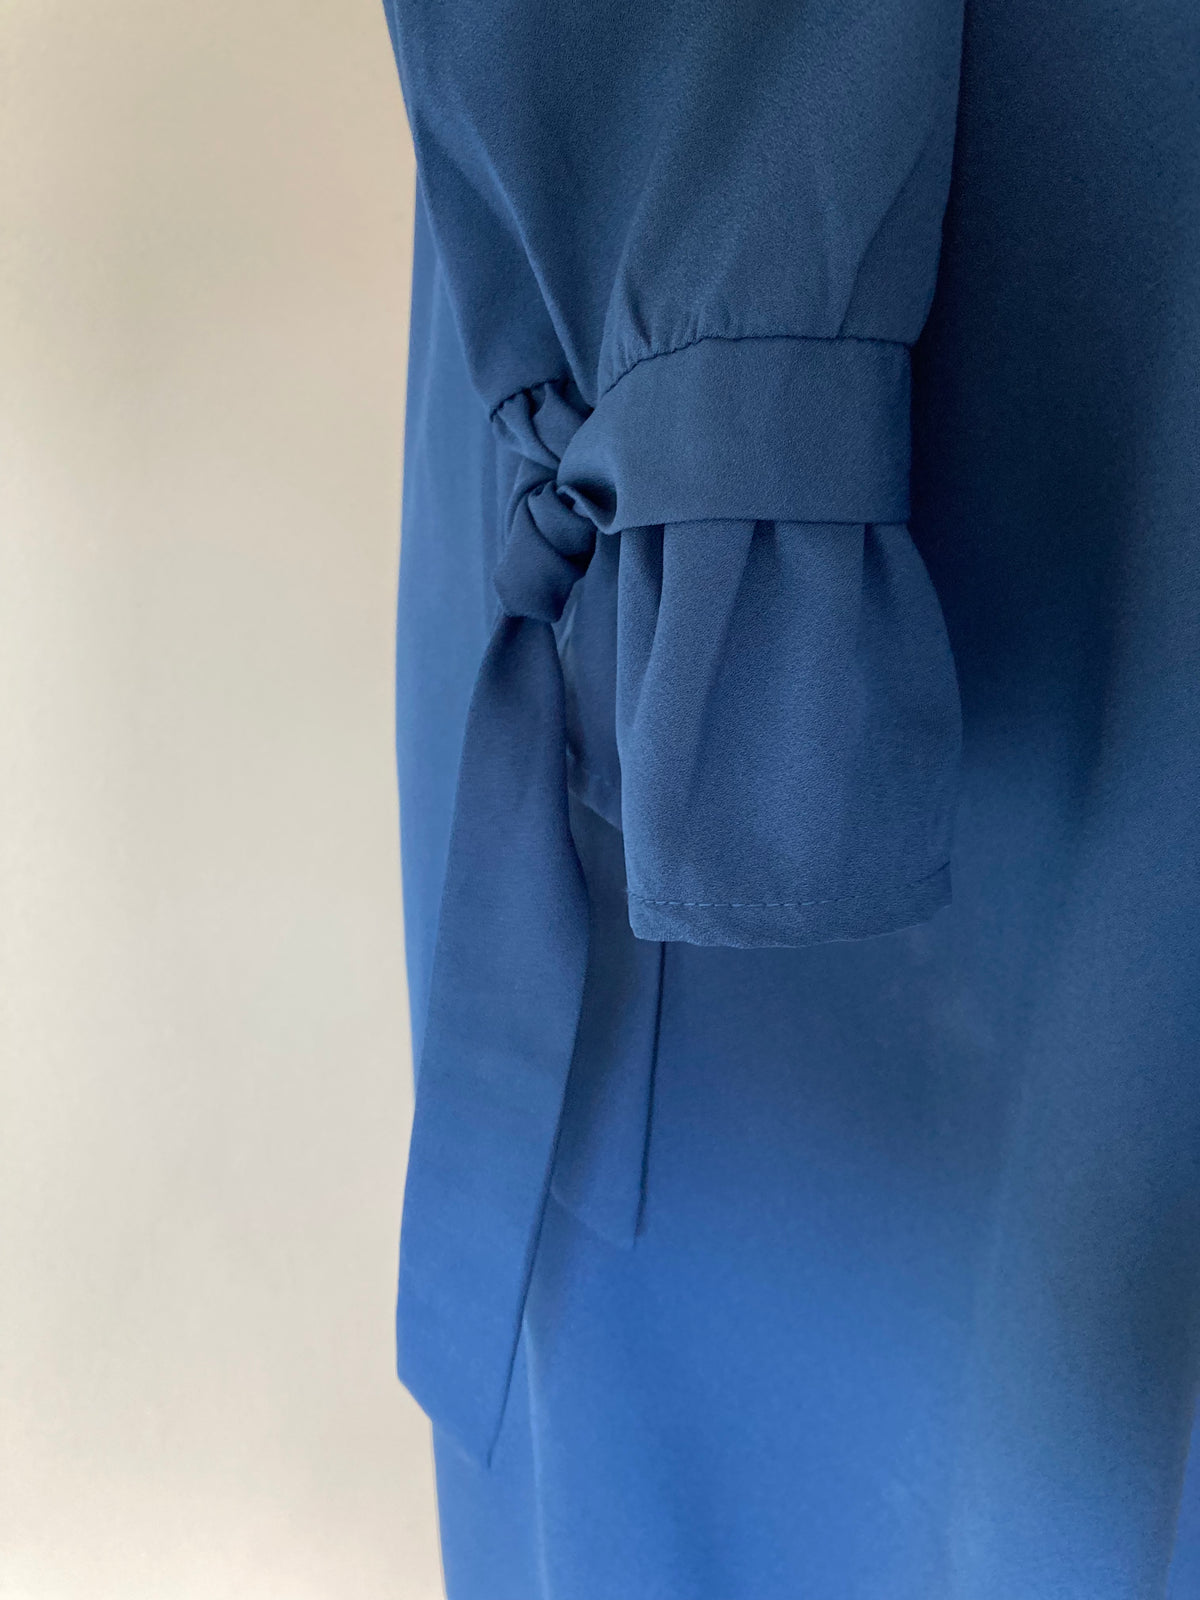 Blue longline dress by BODYFLIRT - Size 18